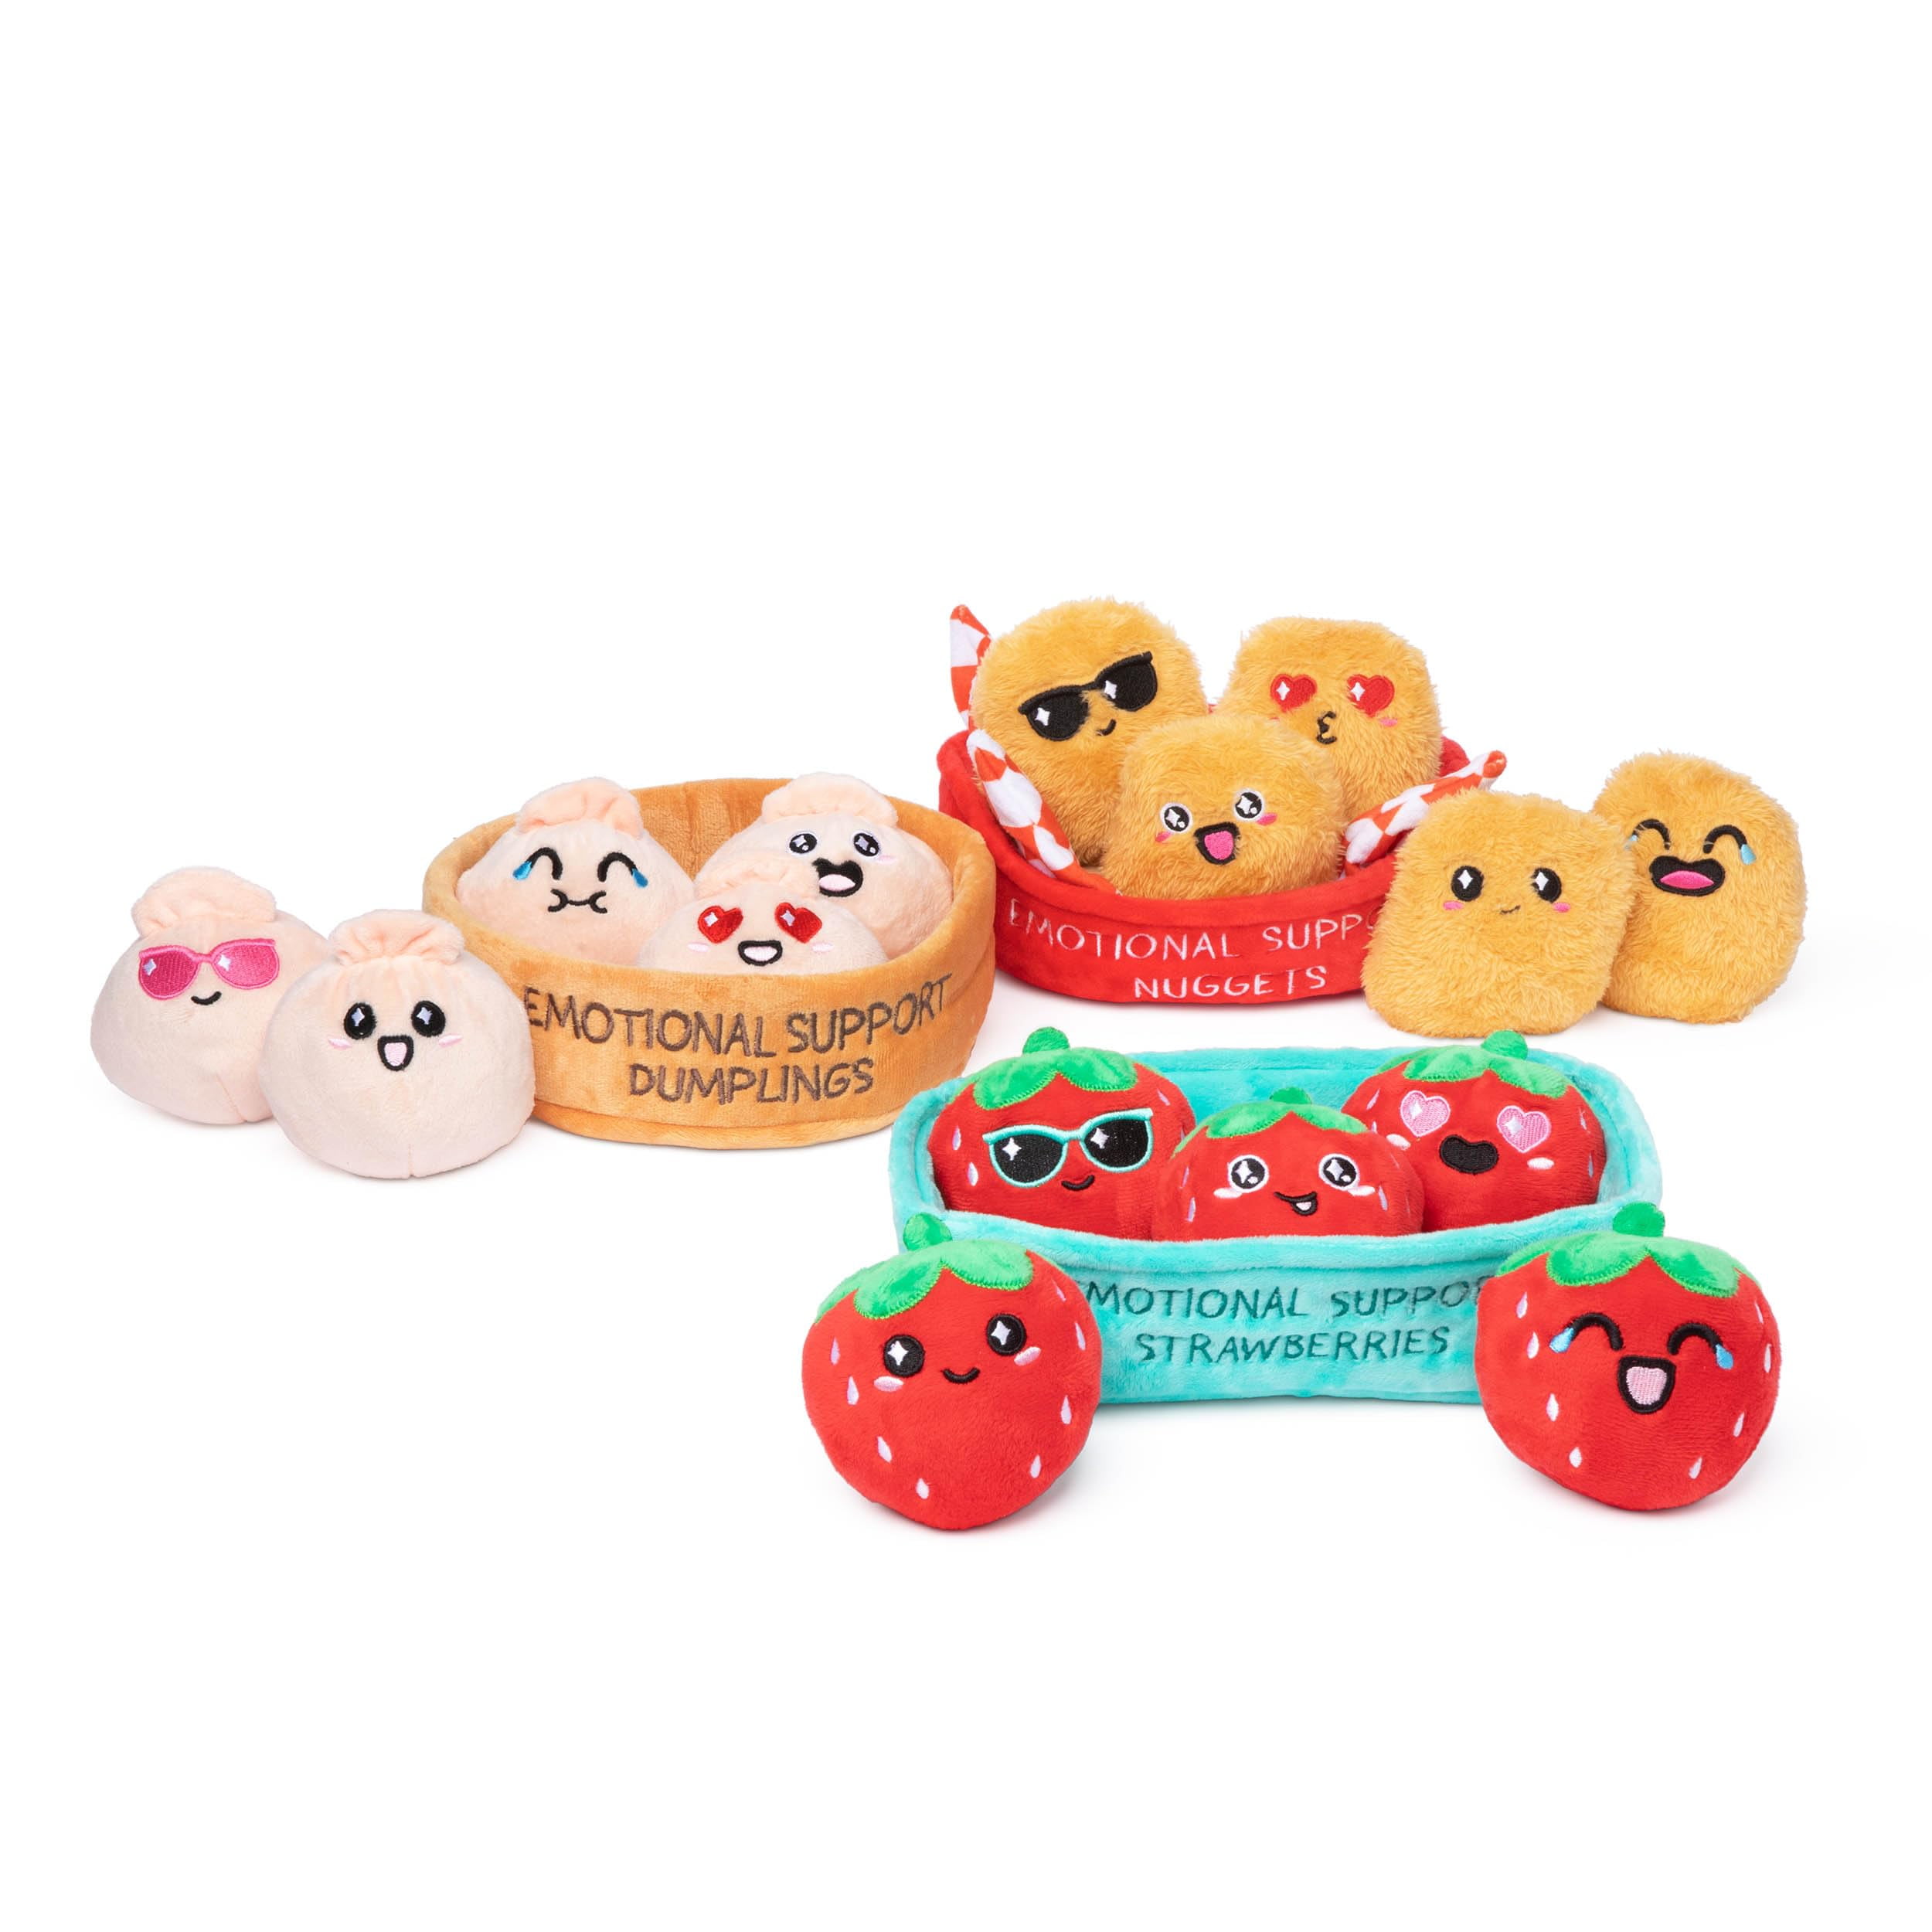 Emotional Support Strawberries Plush Set What Do You Meme - ToyWiz